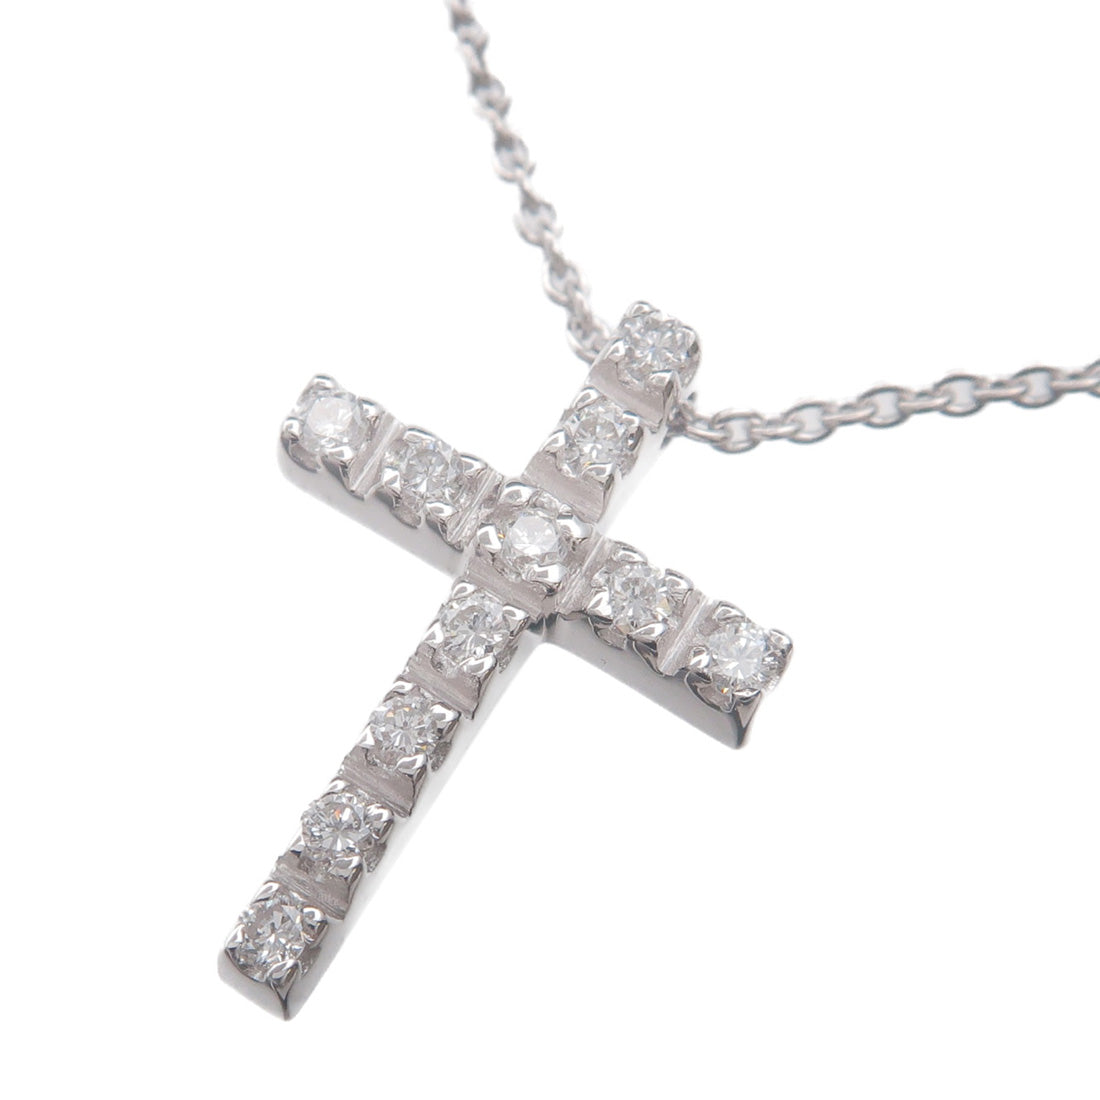 STAR-JEWELRY-Cross-Diamond-Necklace-0.11ct-K18WG-White-Gold